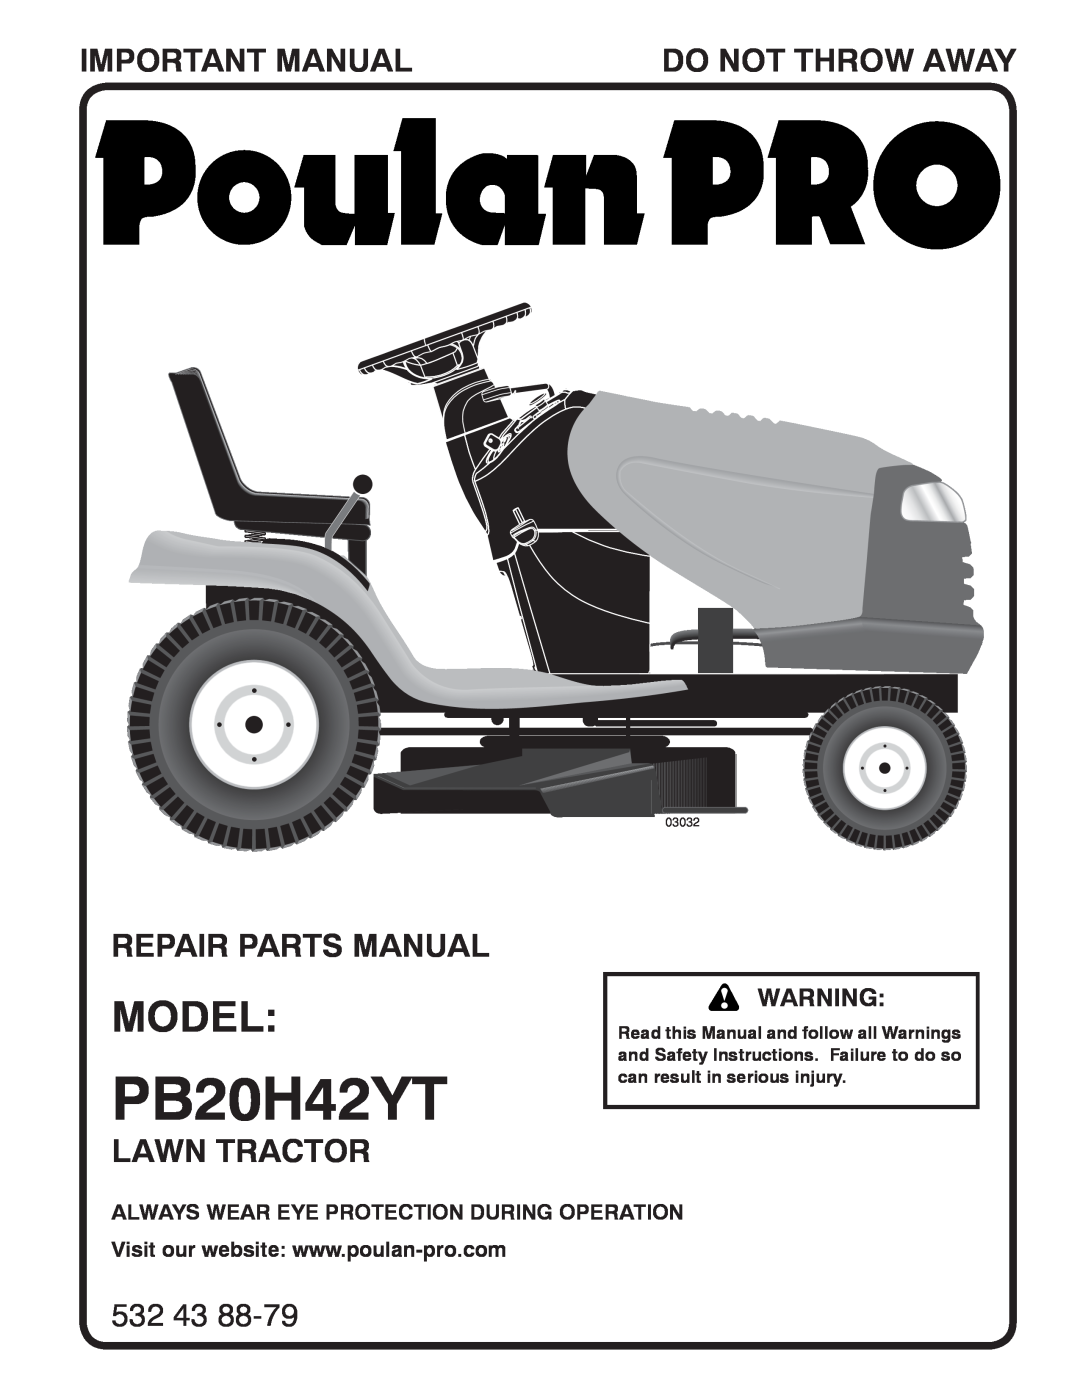 Poulan PB20H42YT manual Model, Important Manual, Do Not Throw Away, Repair Parts Manual, Lawn Tractor, 532,  